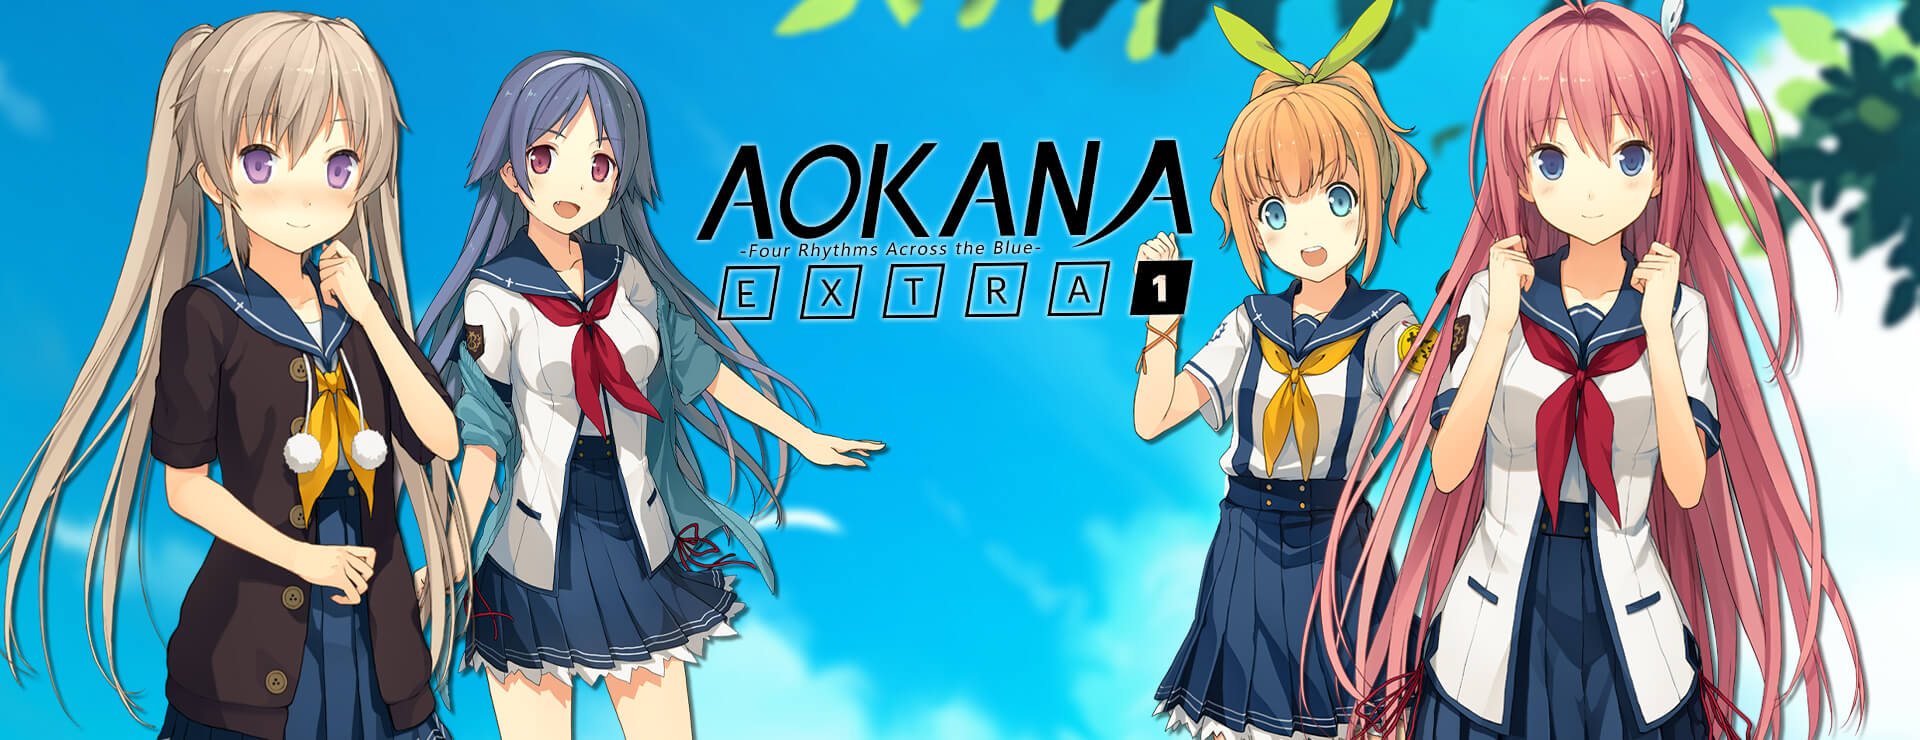 Aokana - EXTRA1 - Novela Visual Juego